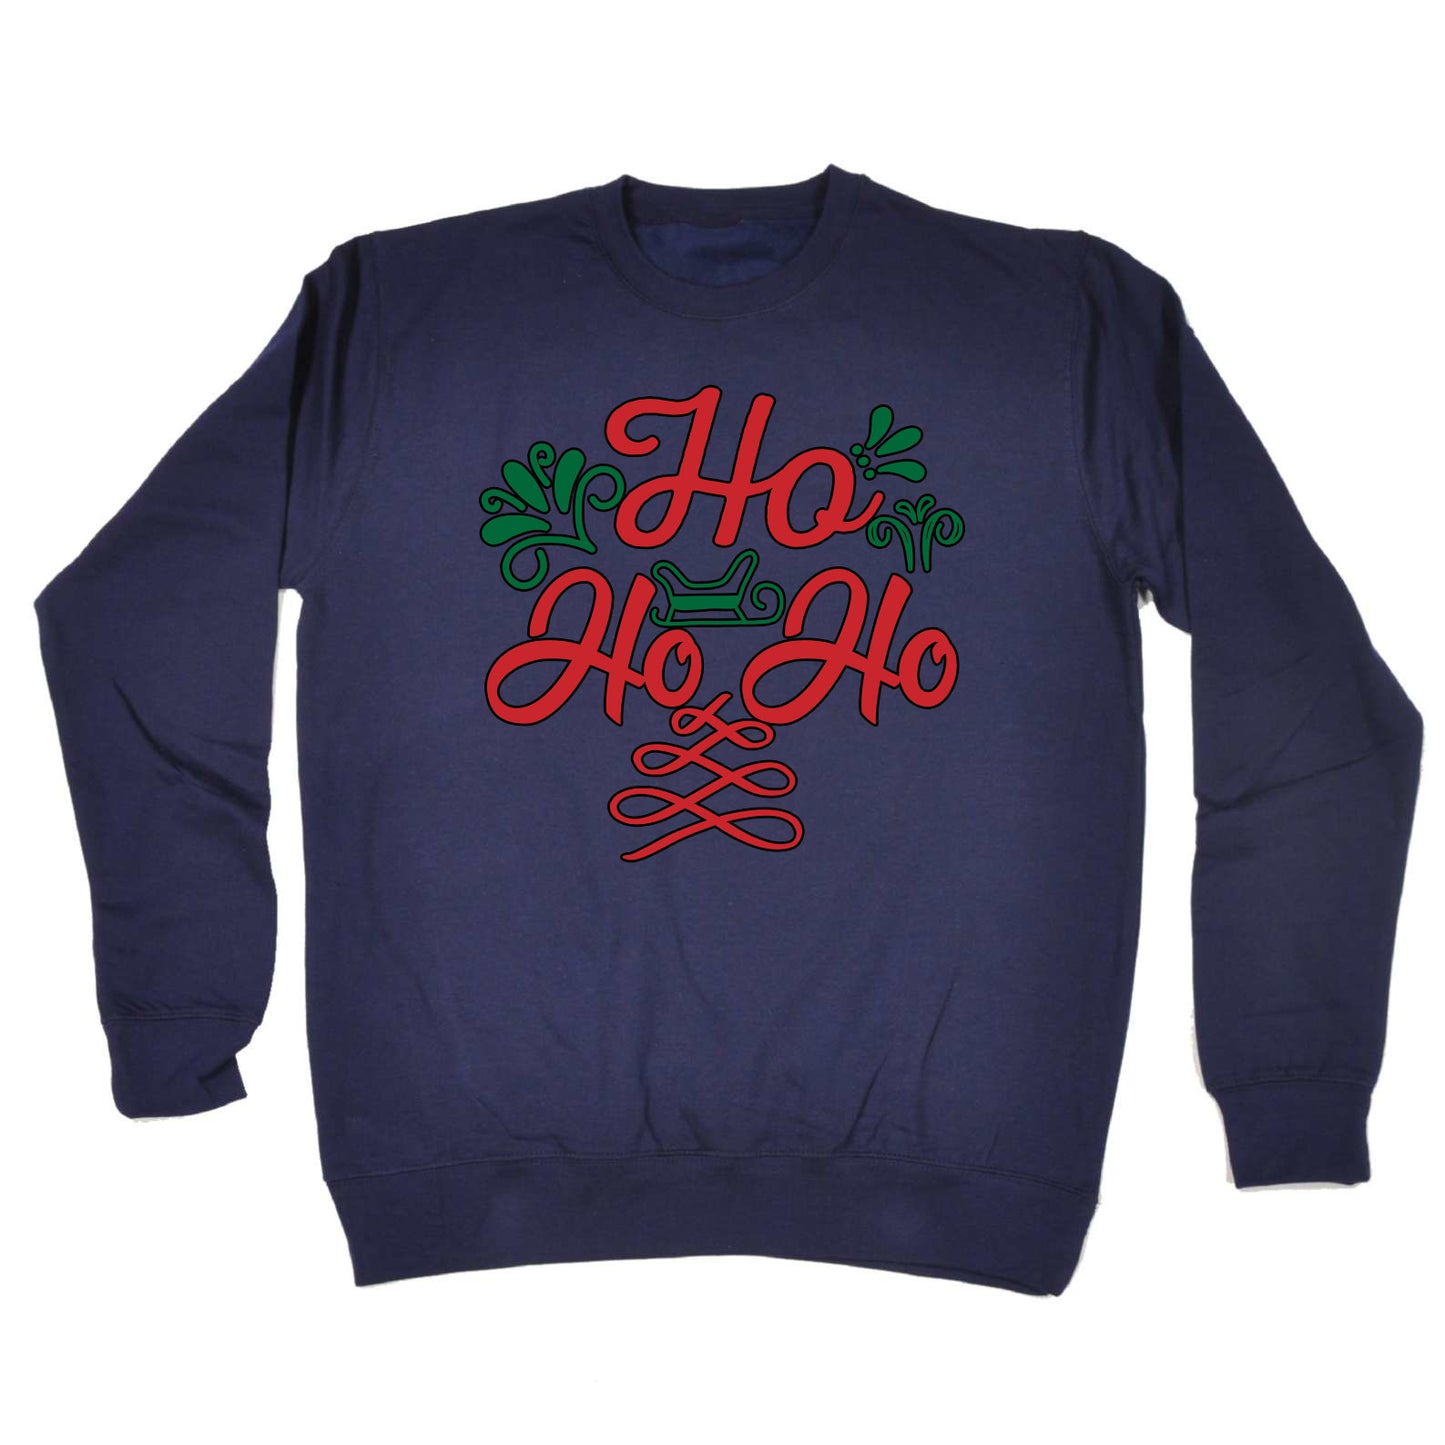 Ho Ho Ho Christmas Santa Xmas - Funny Novelty Sweatshirt